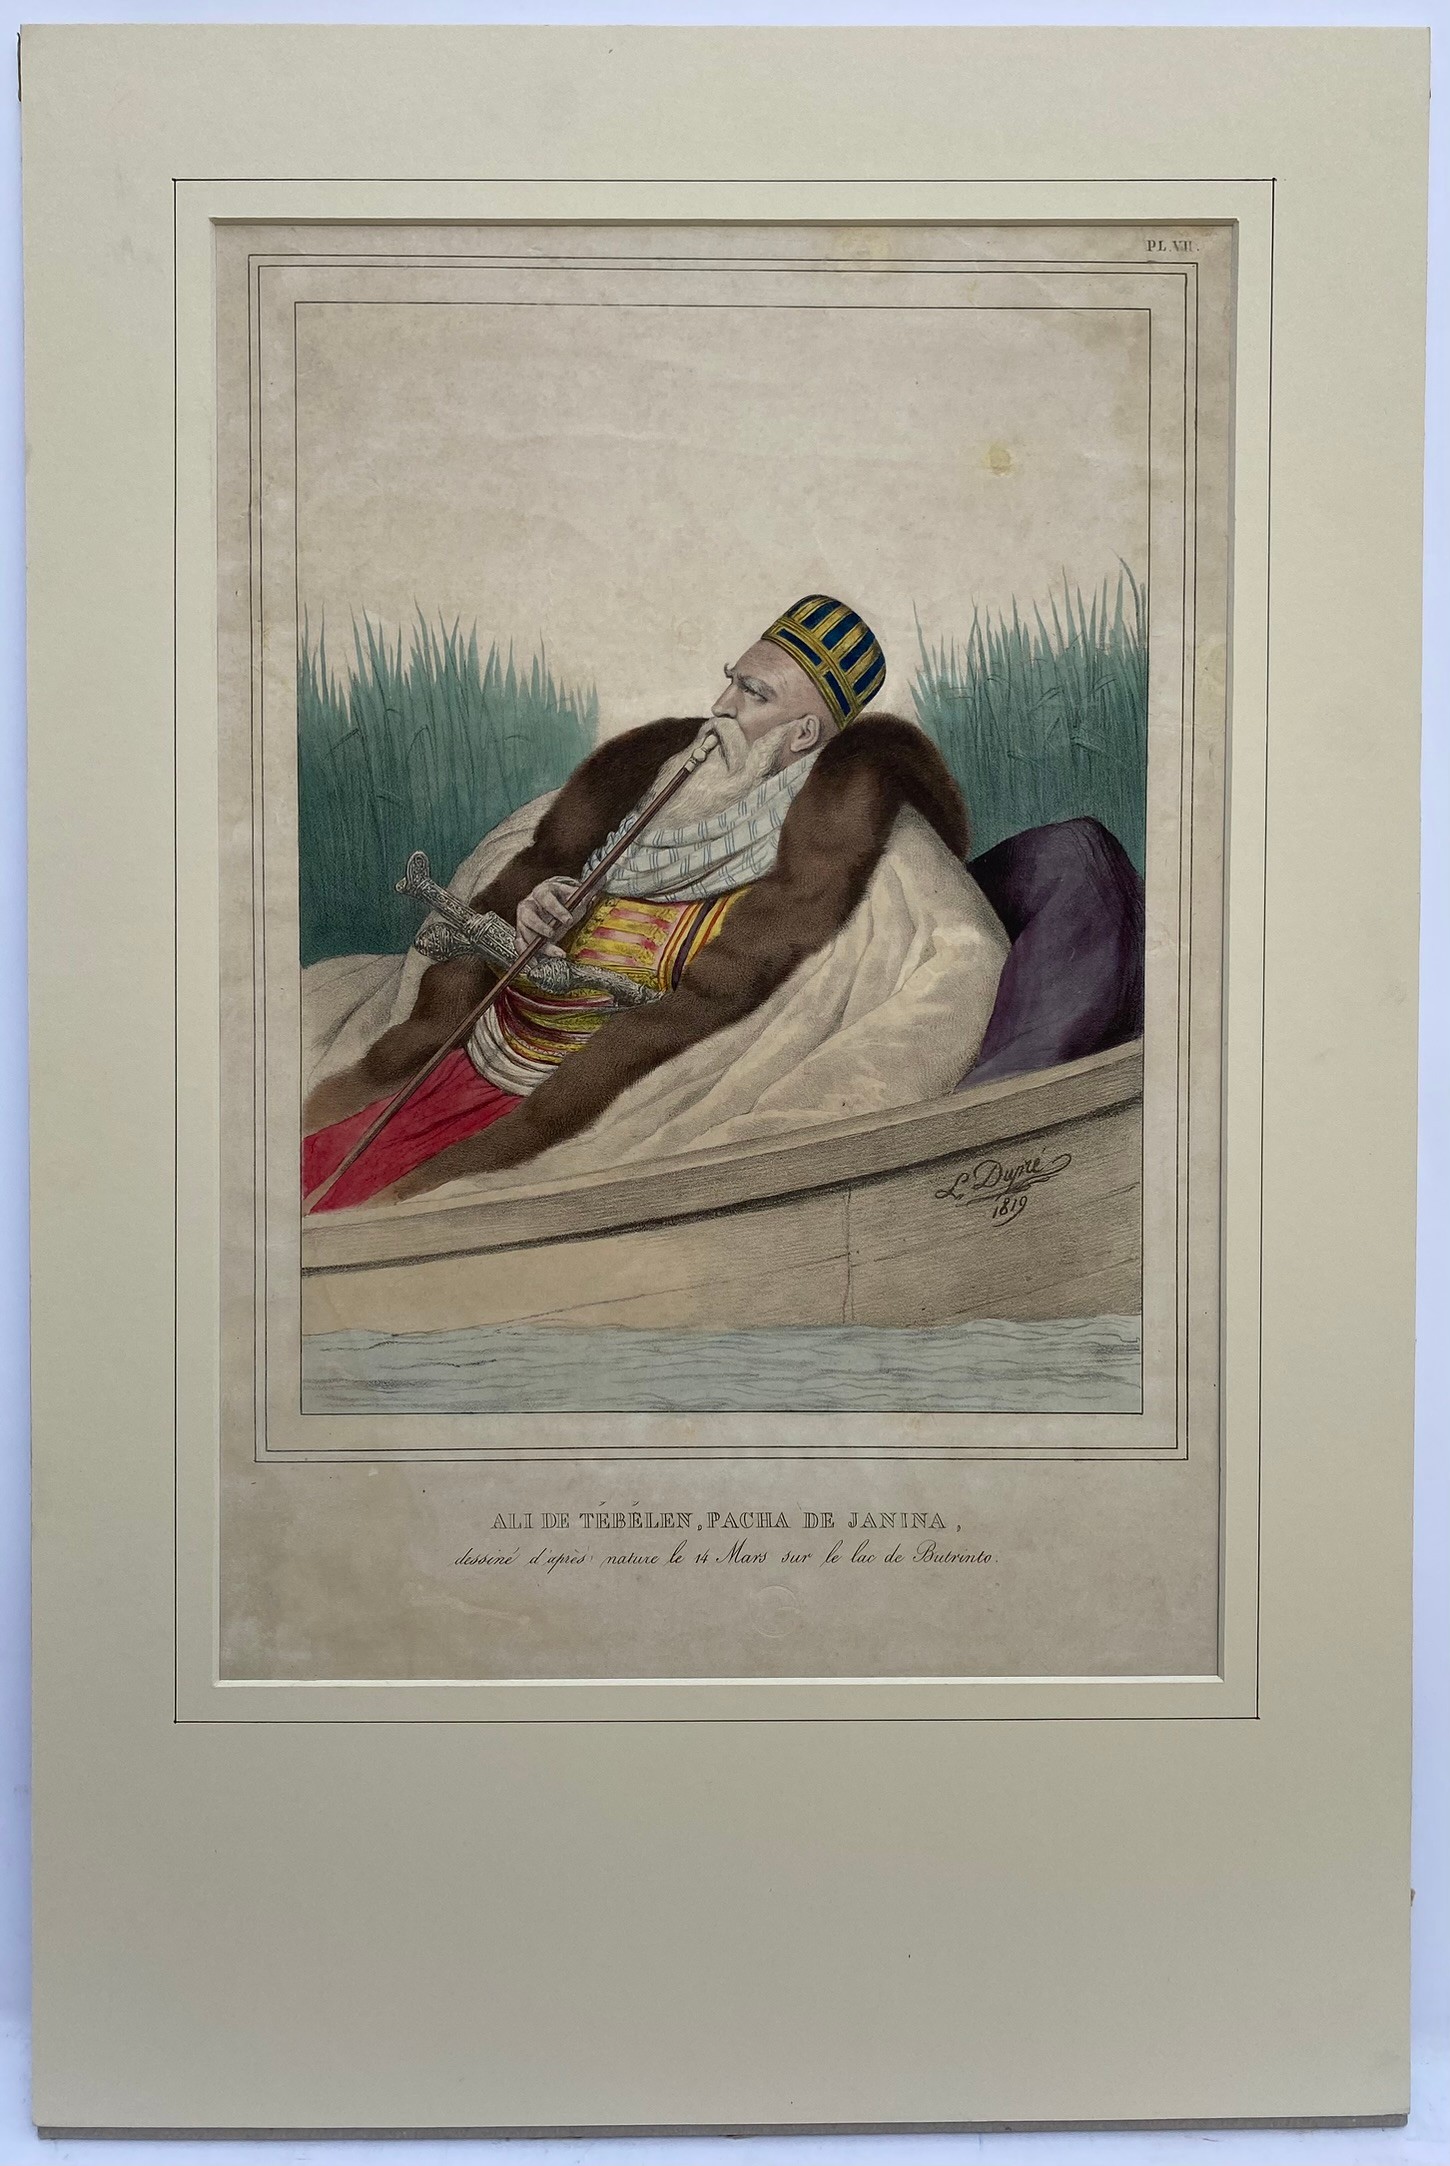 Louis Dupre (1789-1837), Original lithograph hand coloured with watercolour, Titled Ali de